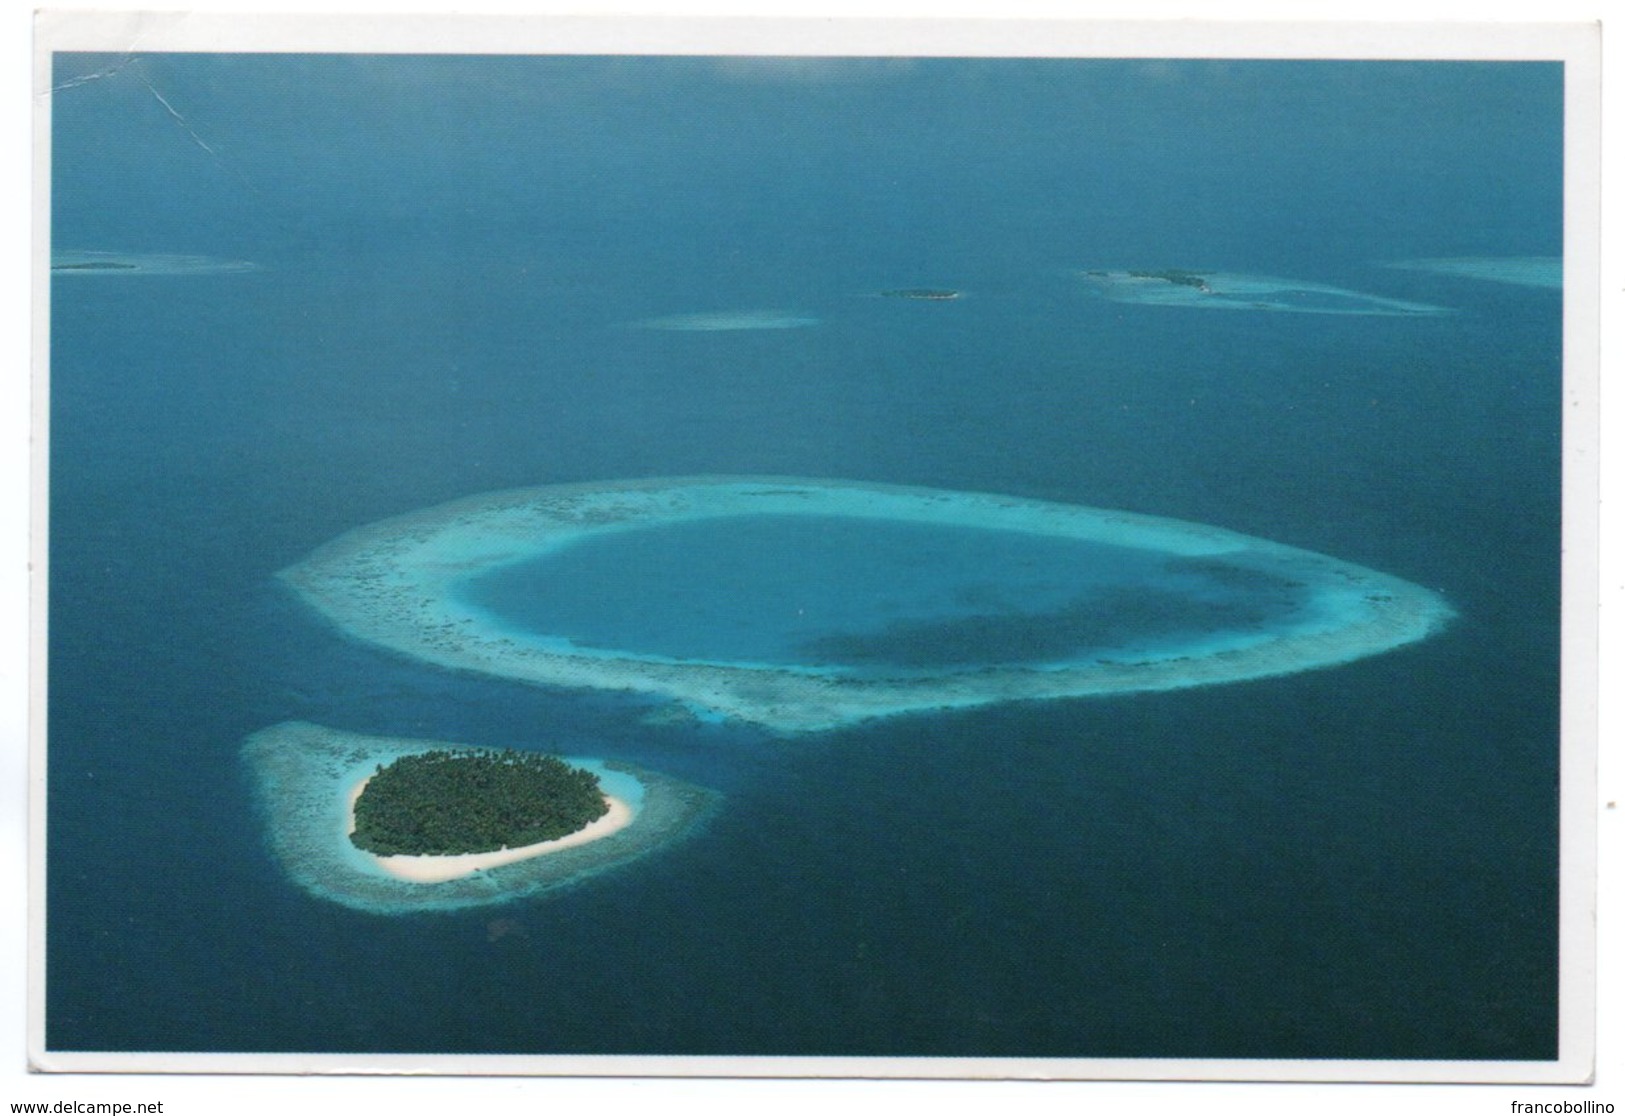 MALDIVES - A NATION OF ISLANDS (PHOTO MOOSA ITHO) / THEMATIC STAMPS-RAILWAYS (SUDAN-RHODESIA) - Maldive